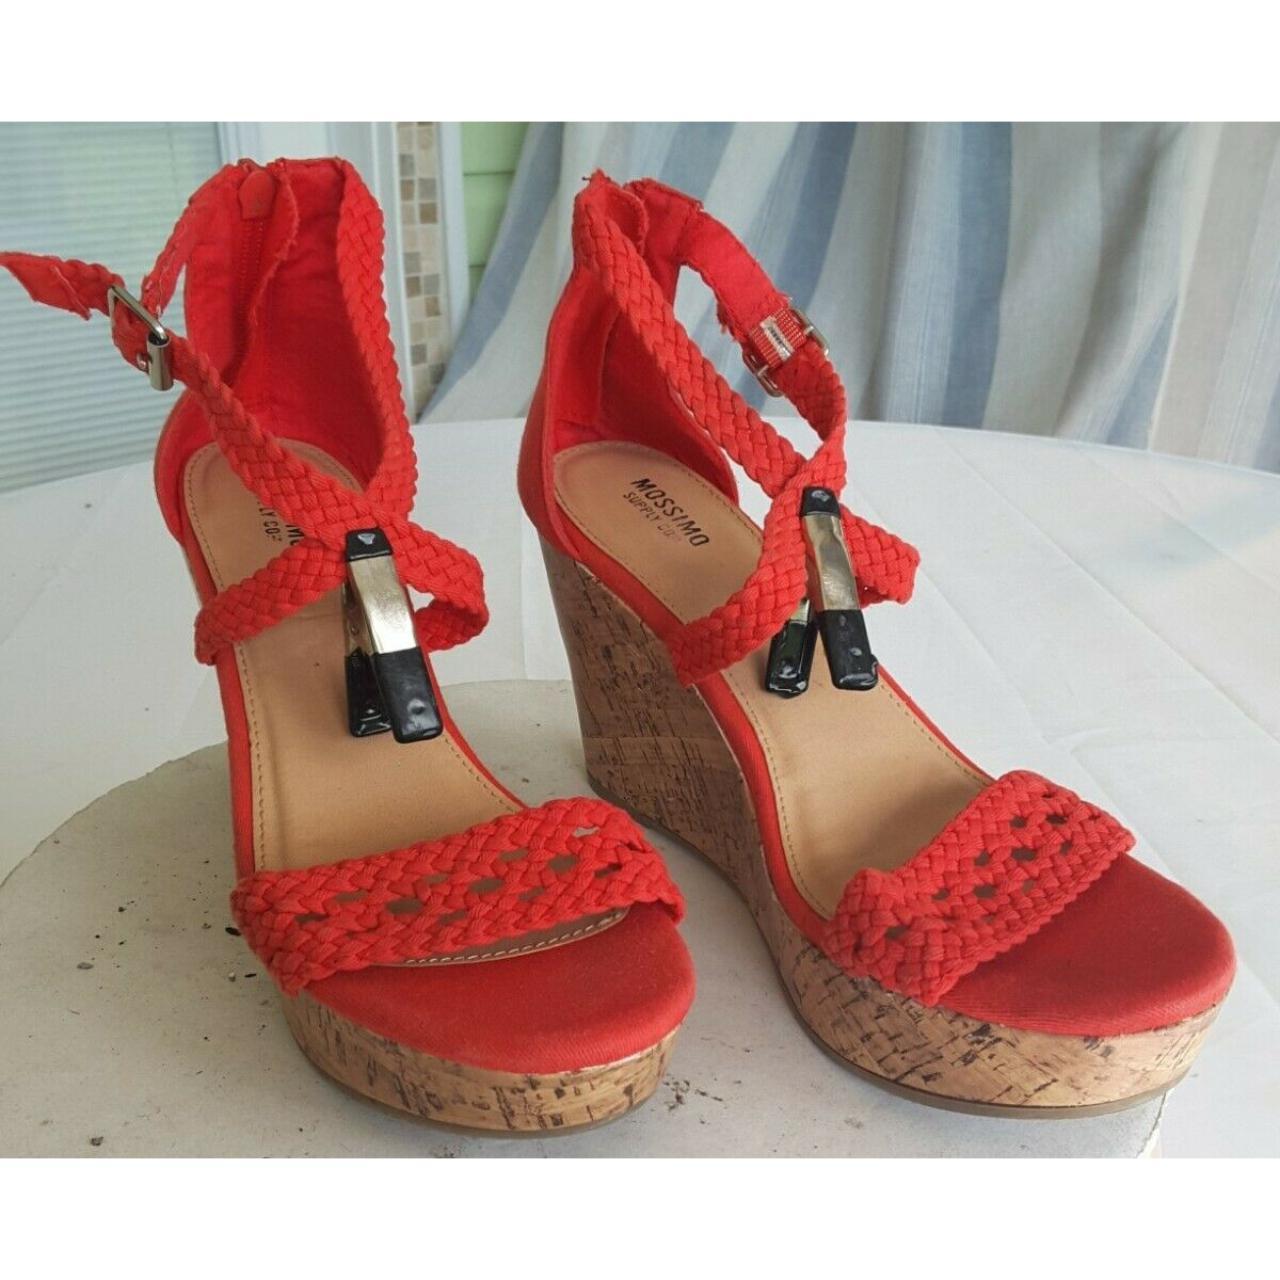 Product Image 4 - Mossimo Womens Sandal Wedge Heels